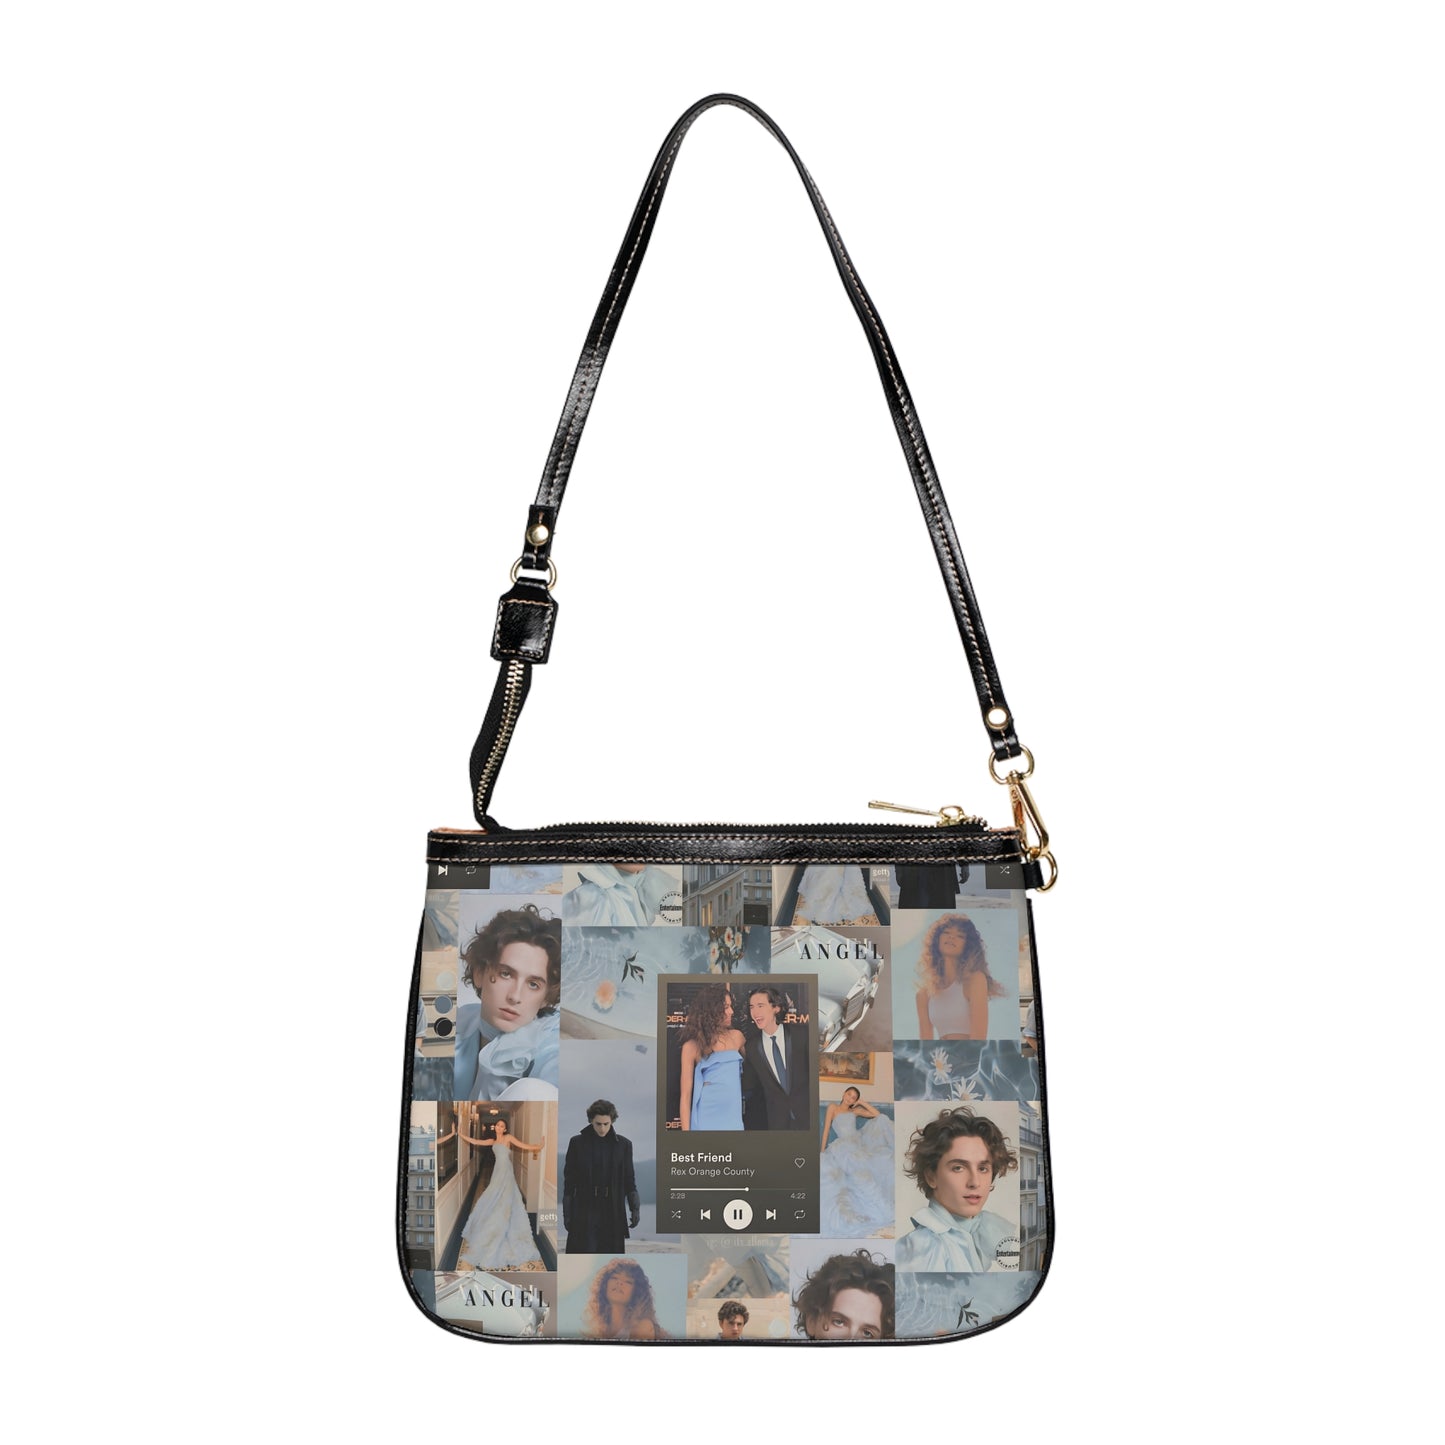 Timothee Chalamet And Zendaya Best Friend Collage Small Shoulder Bag